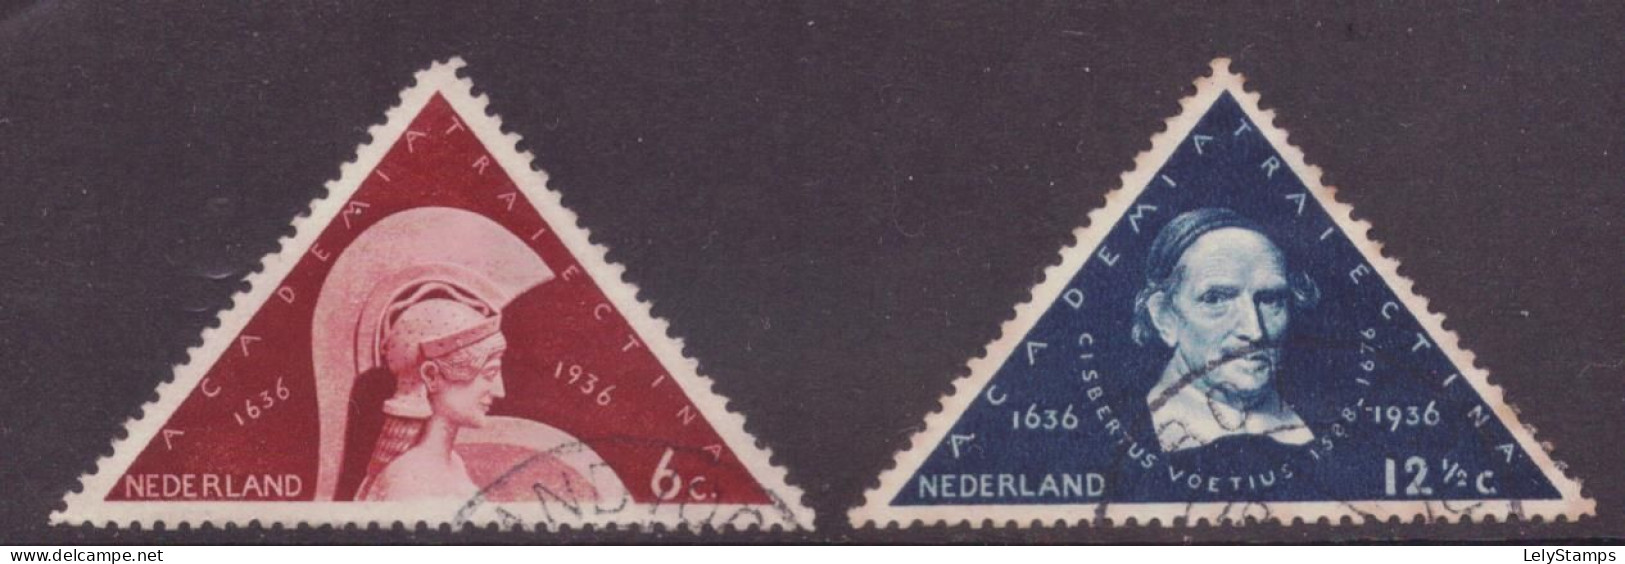 Nederland - Niederlande - Pays Bas NVPH 287 & 288 Used (1936) - Gebruikt